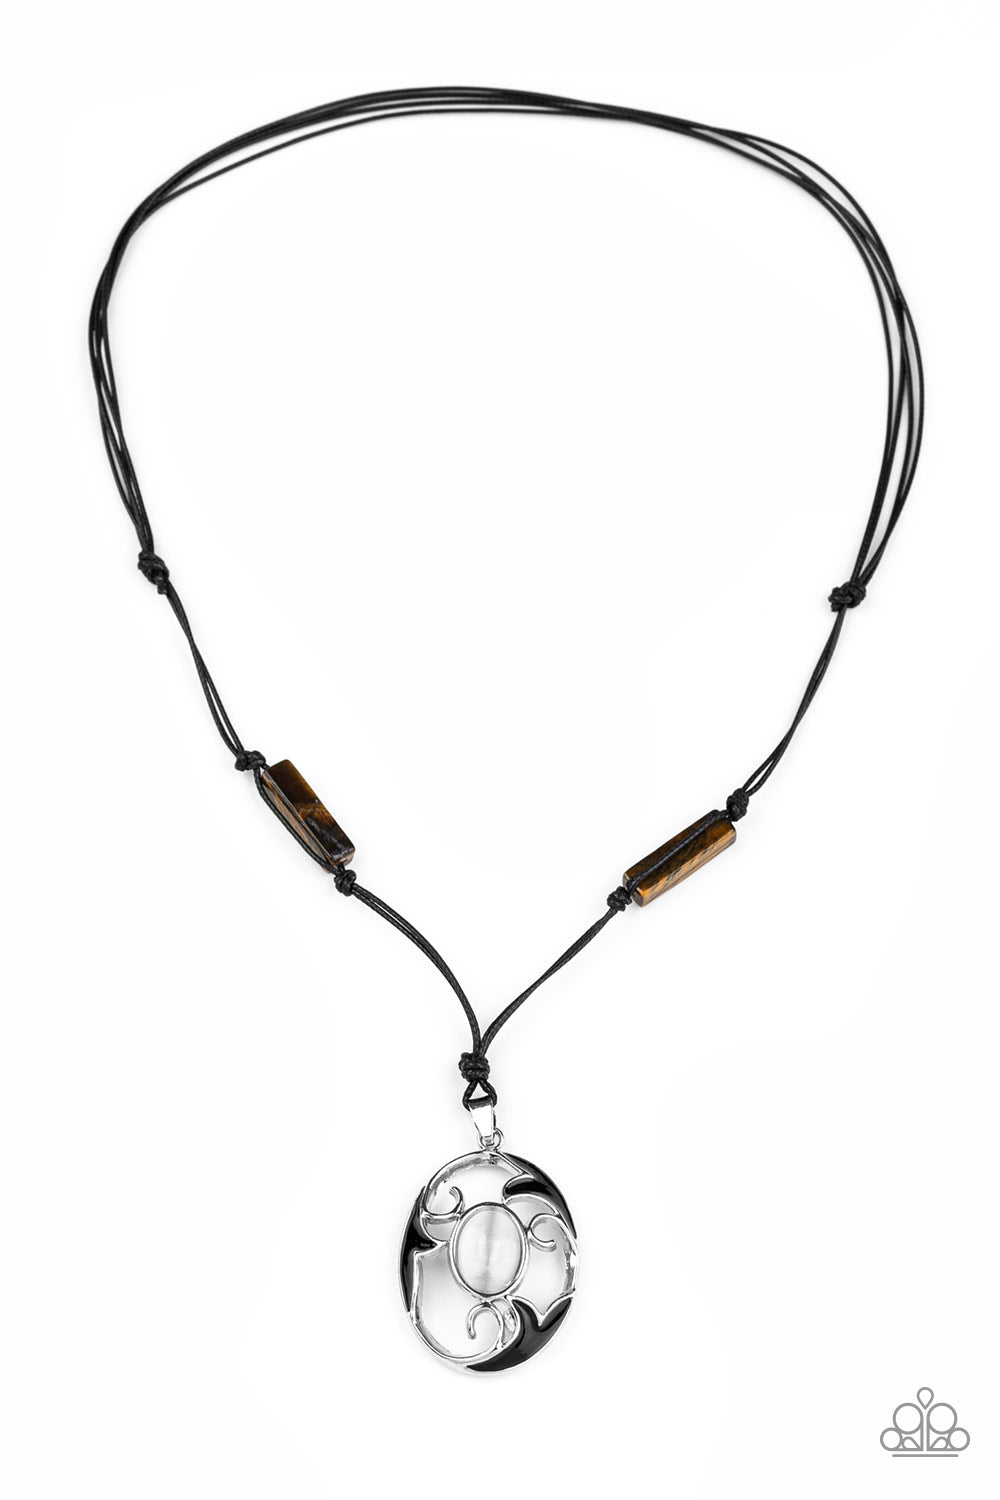 Tidal Talisman - brown - Paparazzi necklace